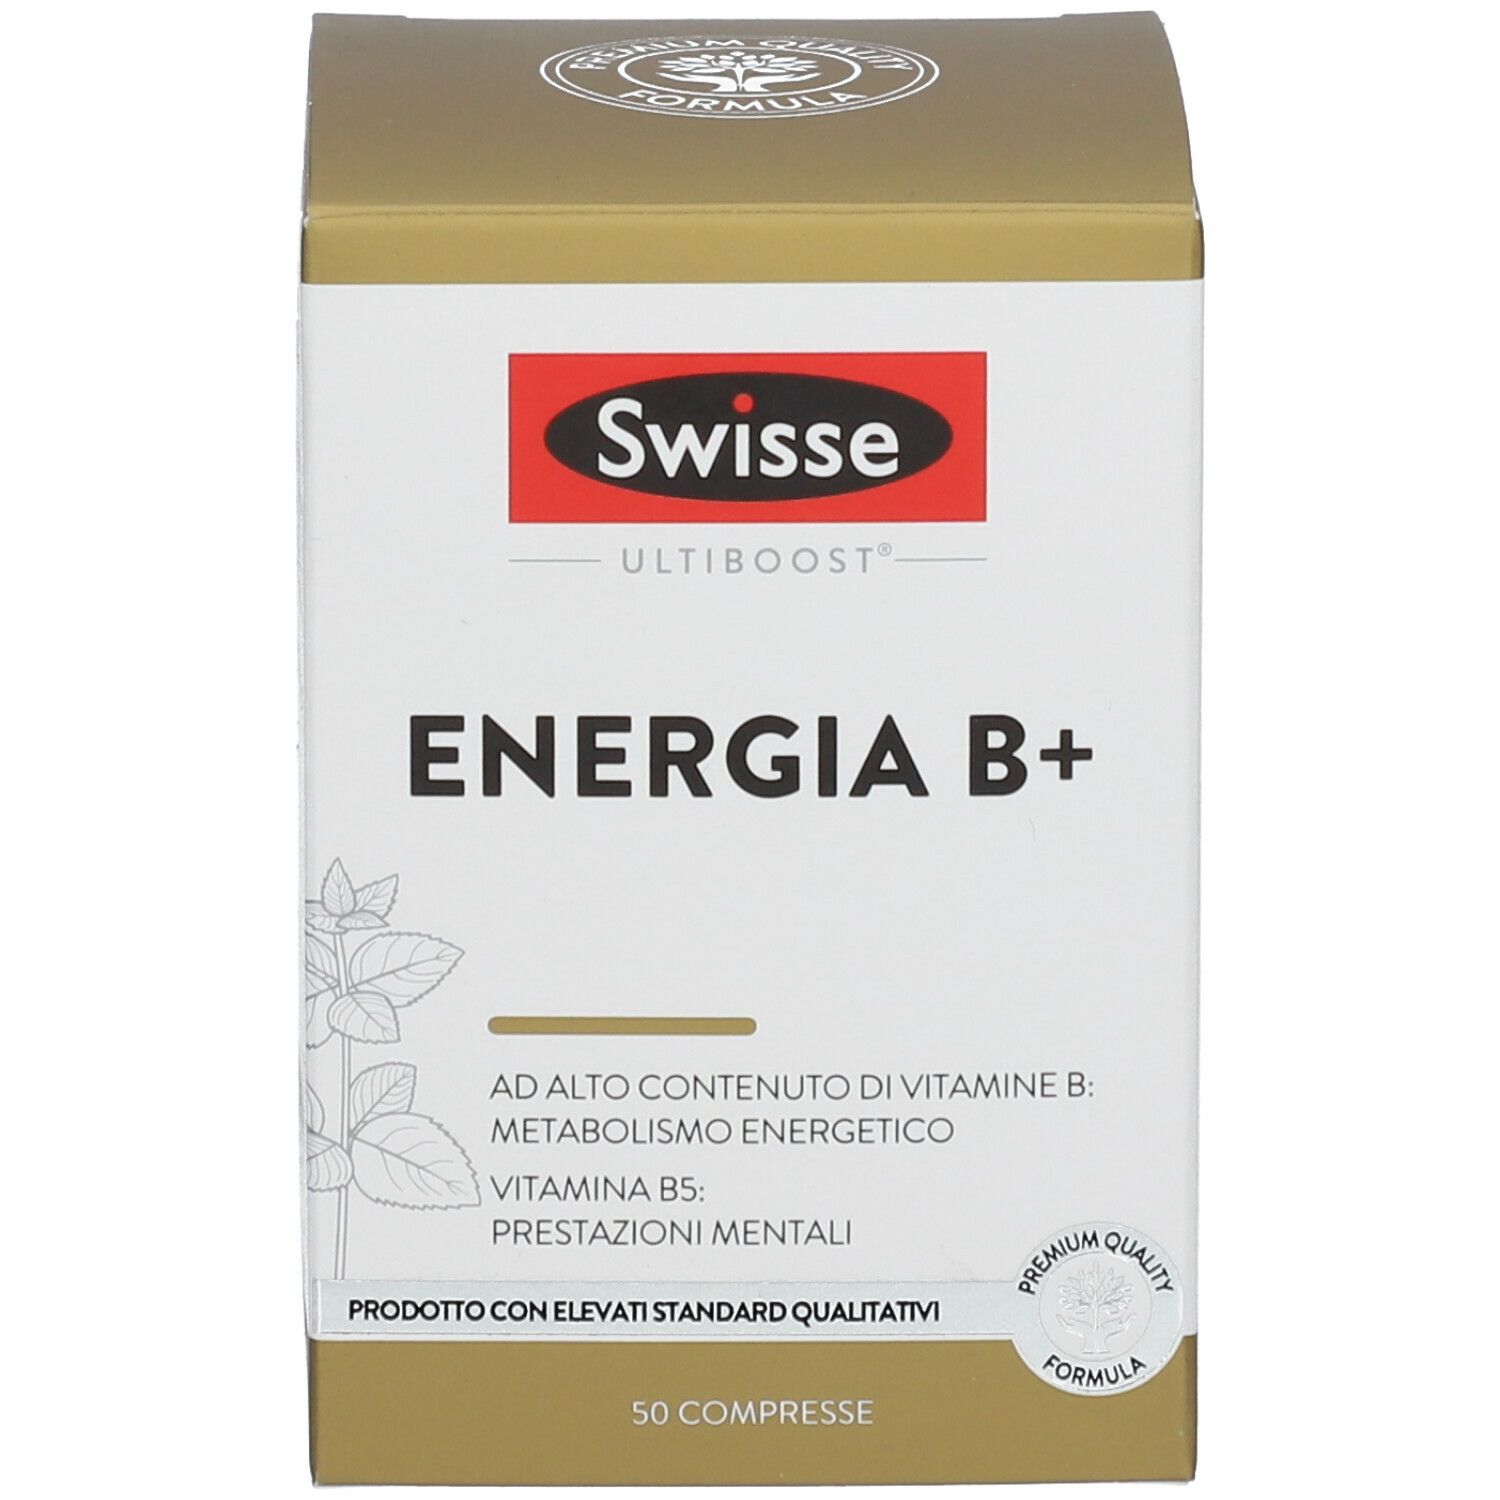 Swisse Energia B+